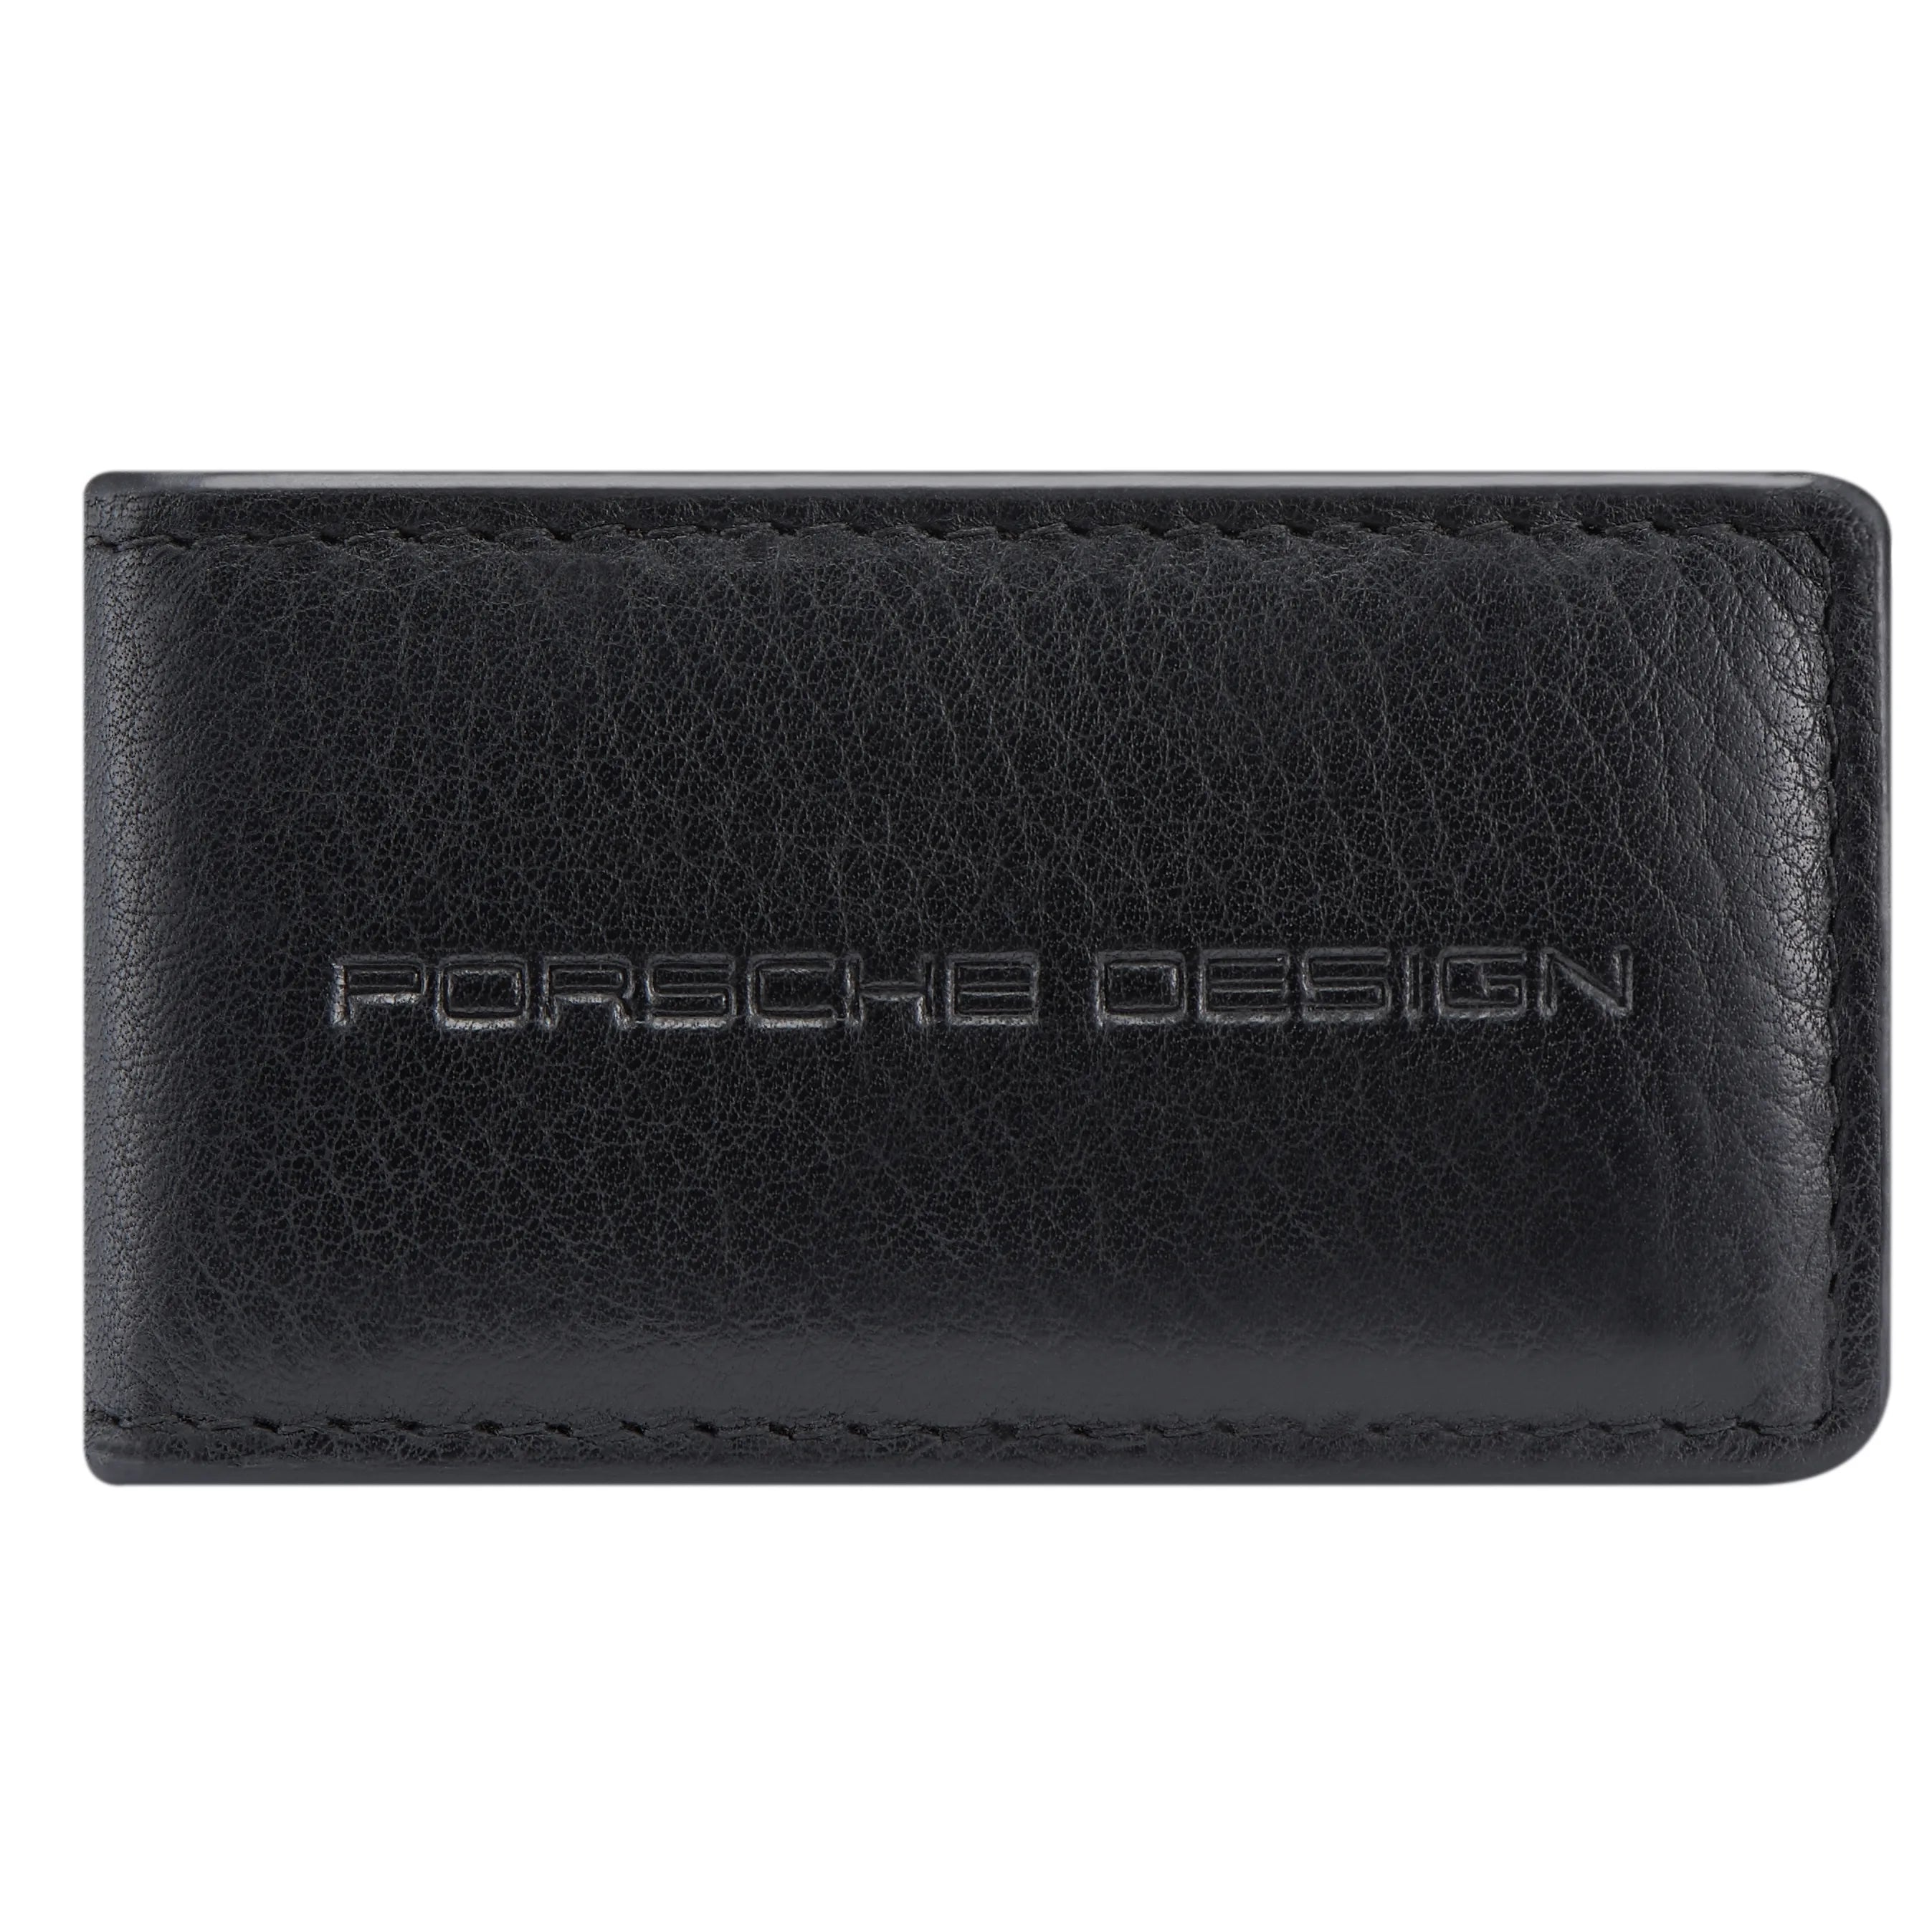 Porsche Design Accessories Business Money Clip 7 cm - Black